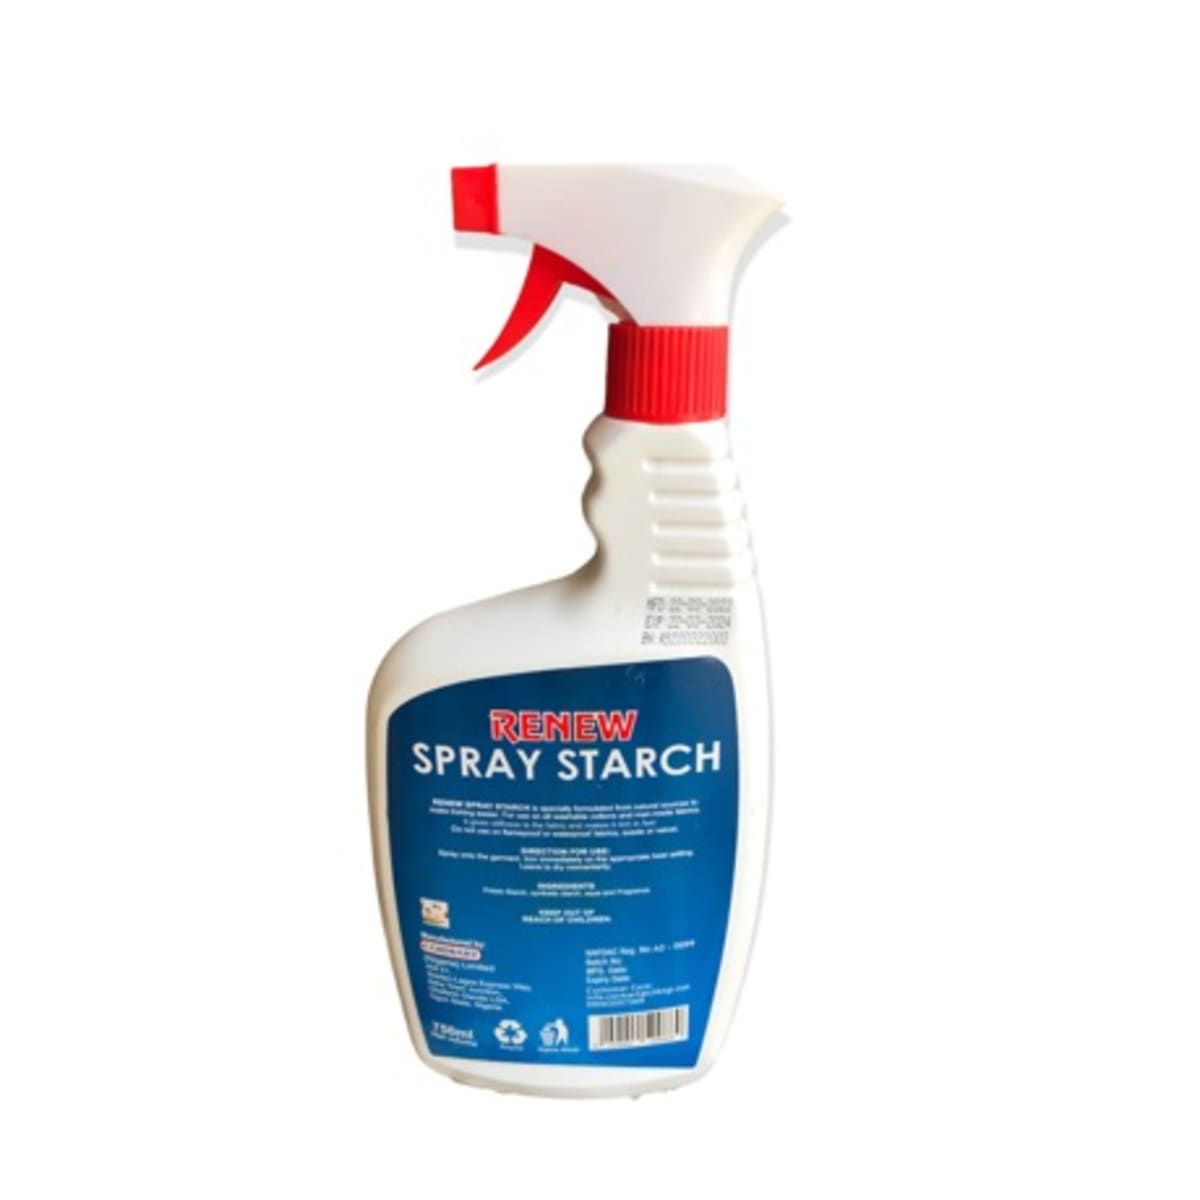 Buy Spray Starch in Nigeria, Laundry